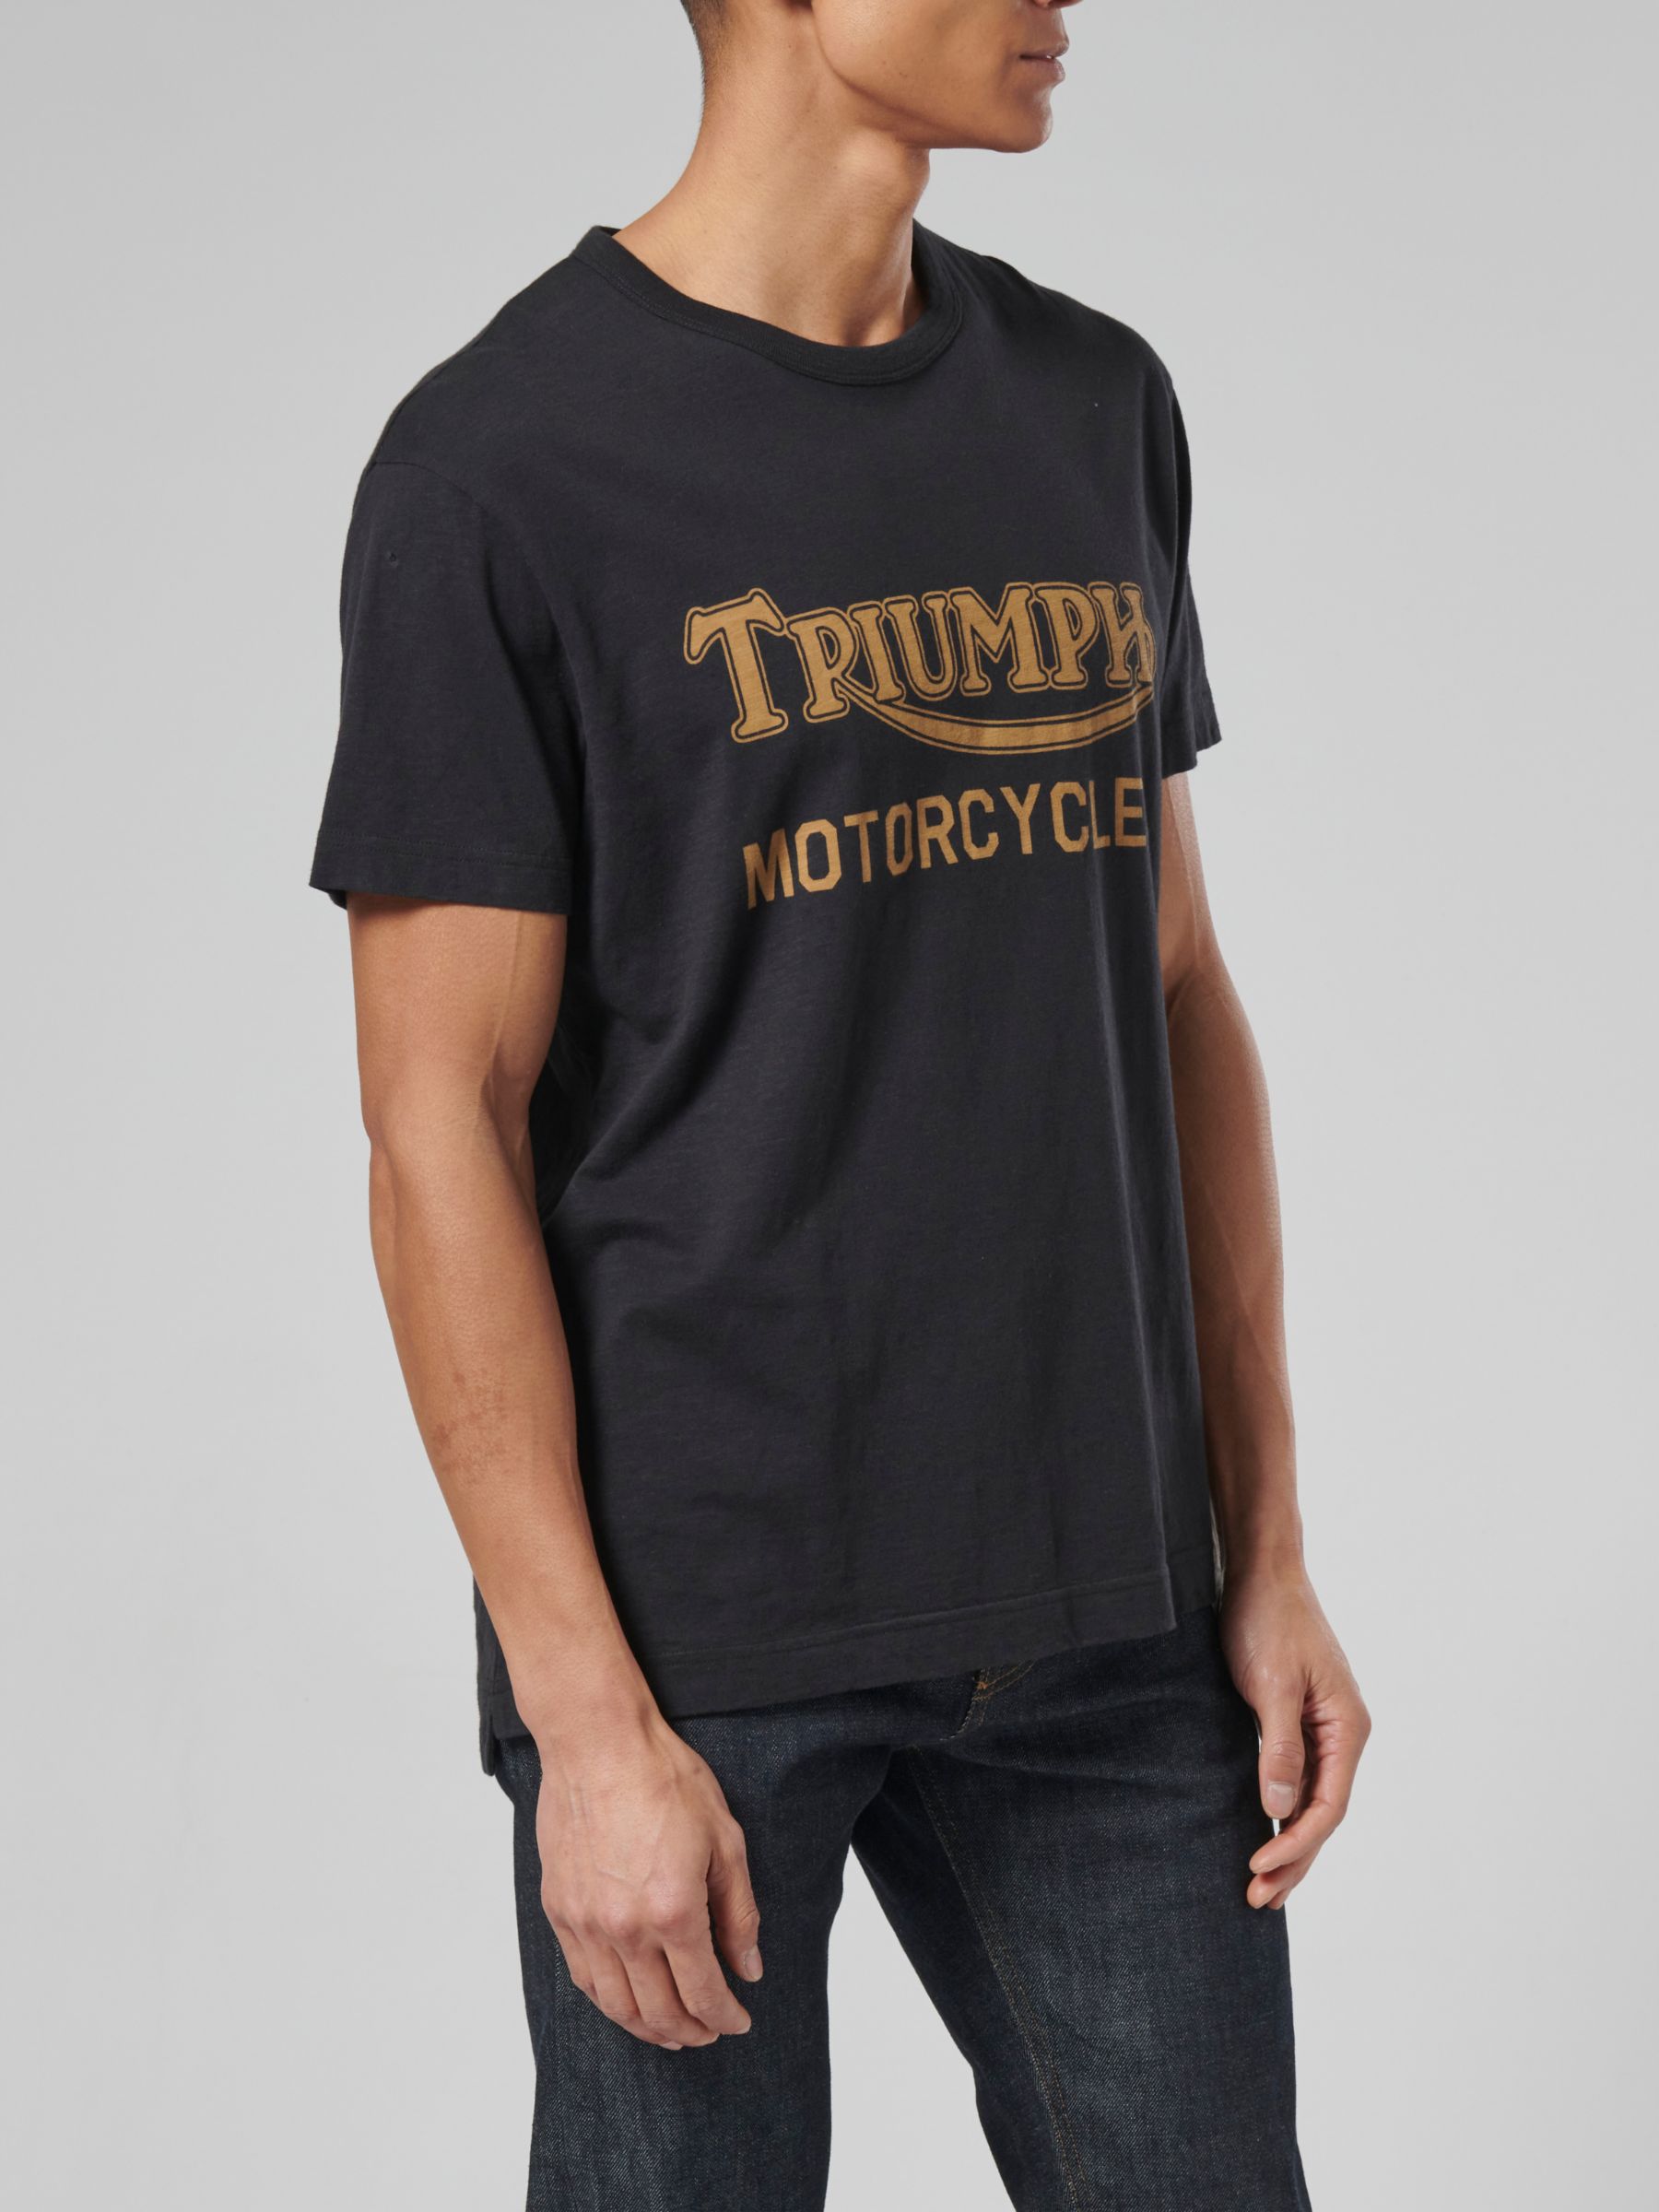 Triumph Motorcycles Barwell T-Shirt, Black at John Lewis & Partners